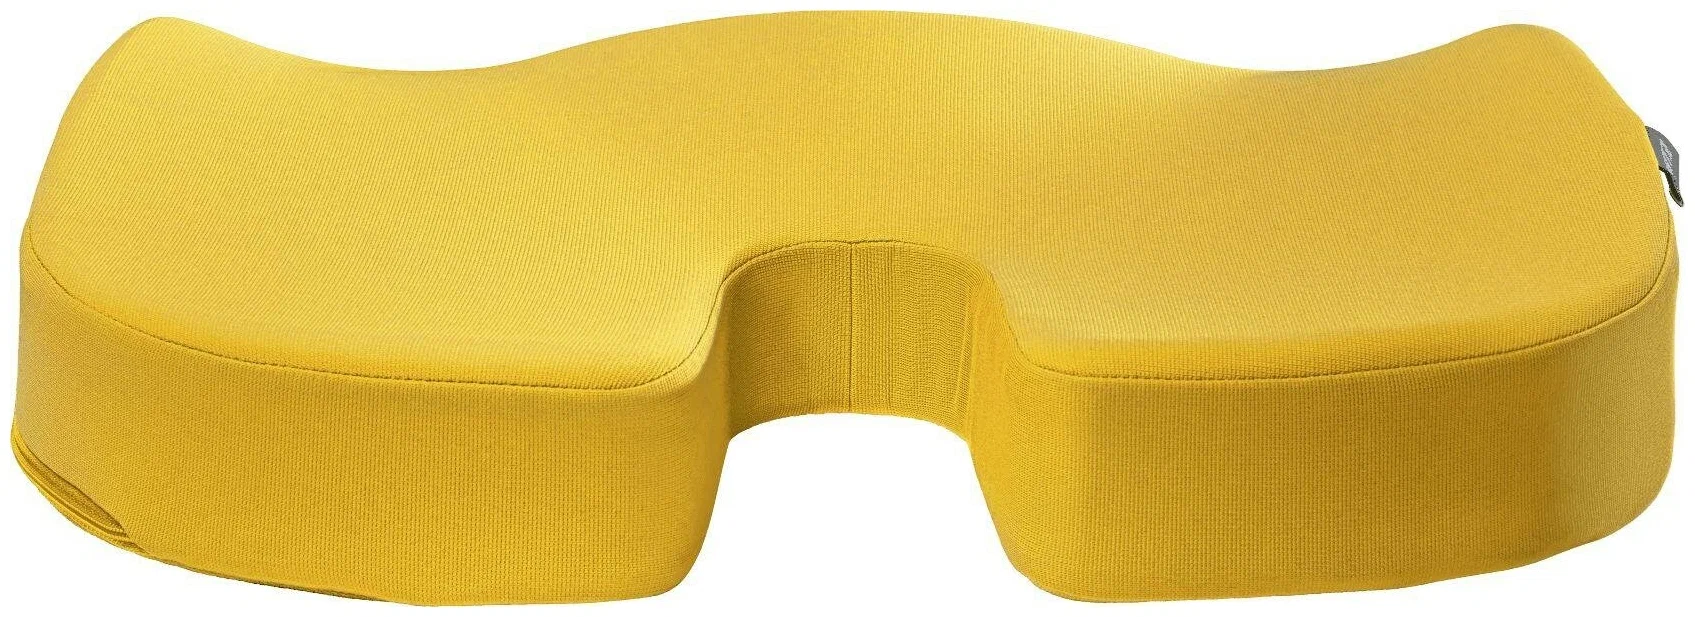 Поддерживающая подушка Leitz Ergo Cosy желтый (52840019)